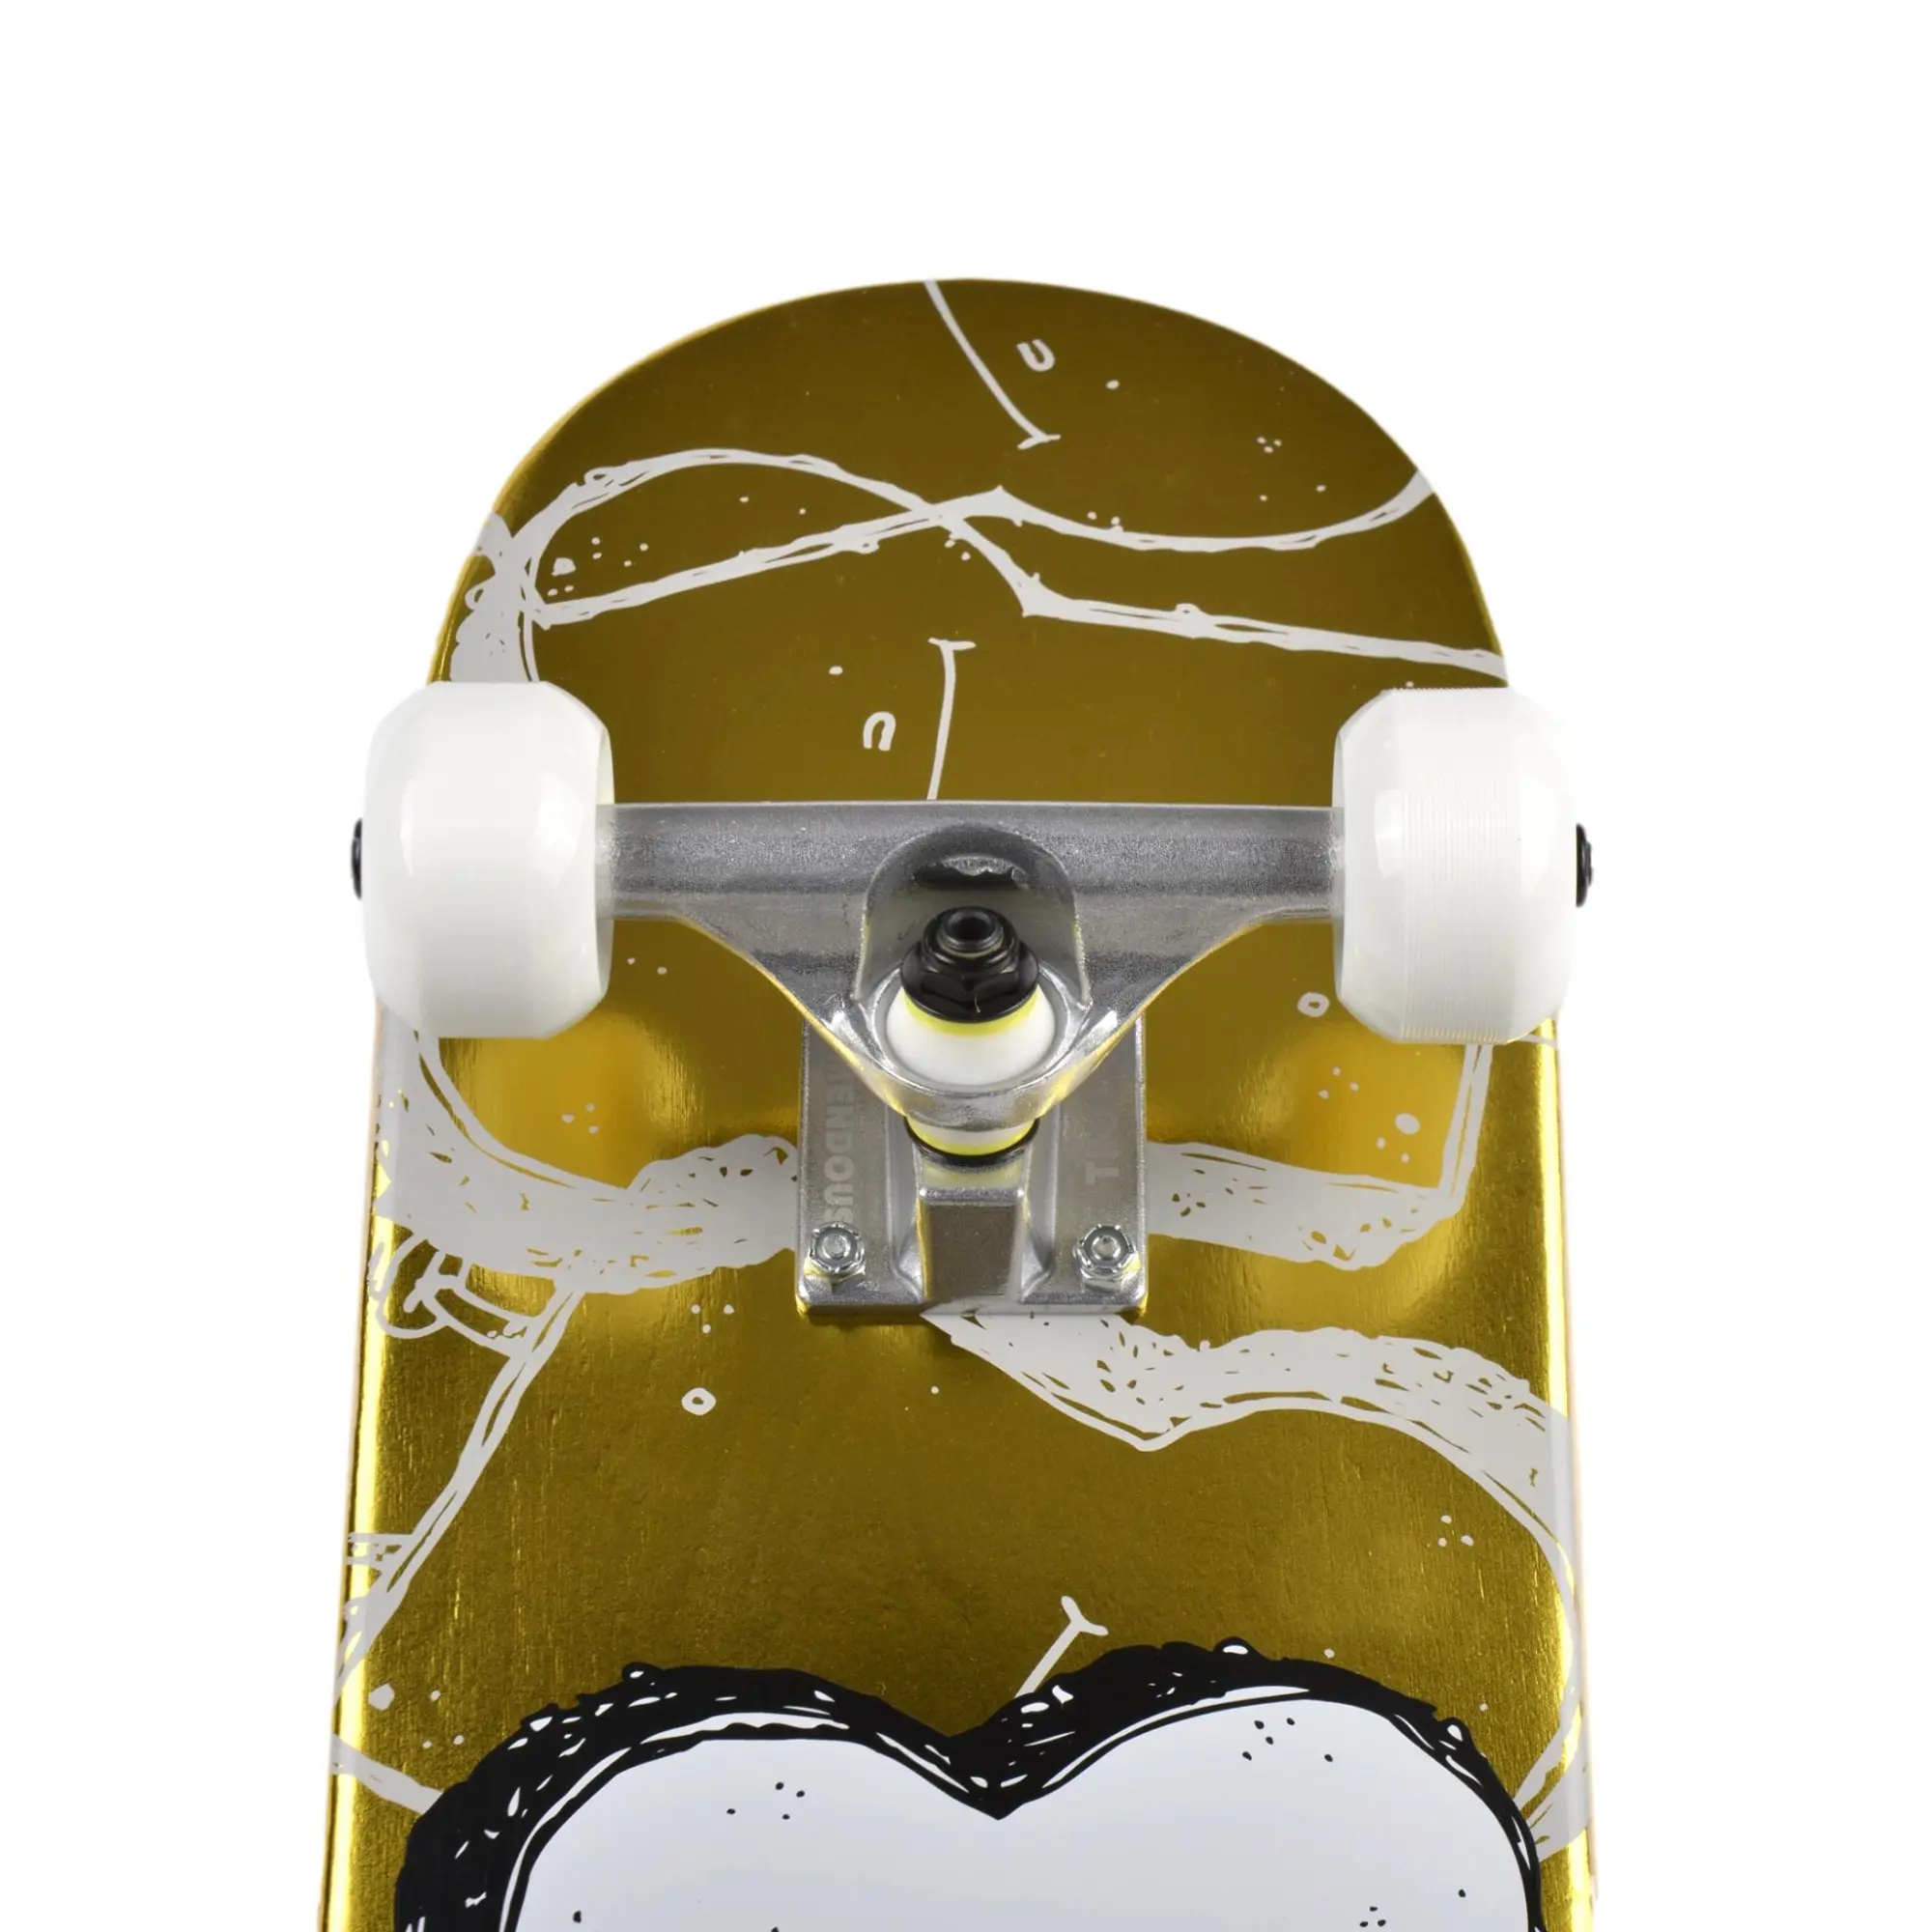 Inpeddo X Lousy Livin Toast Skateboard Completo 7.25